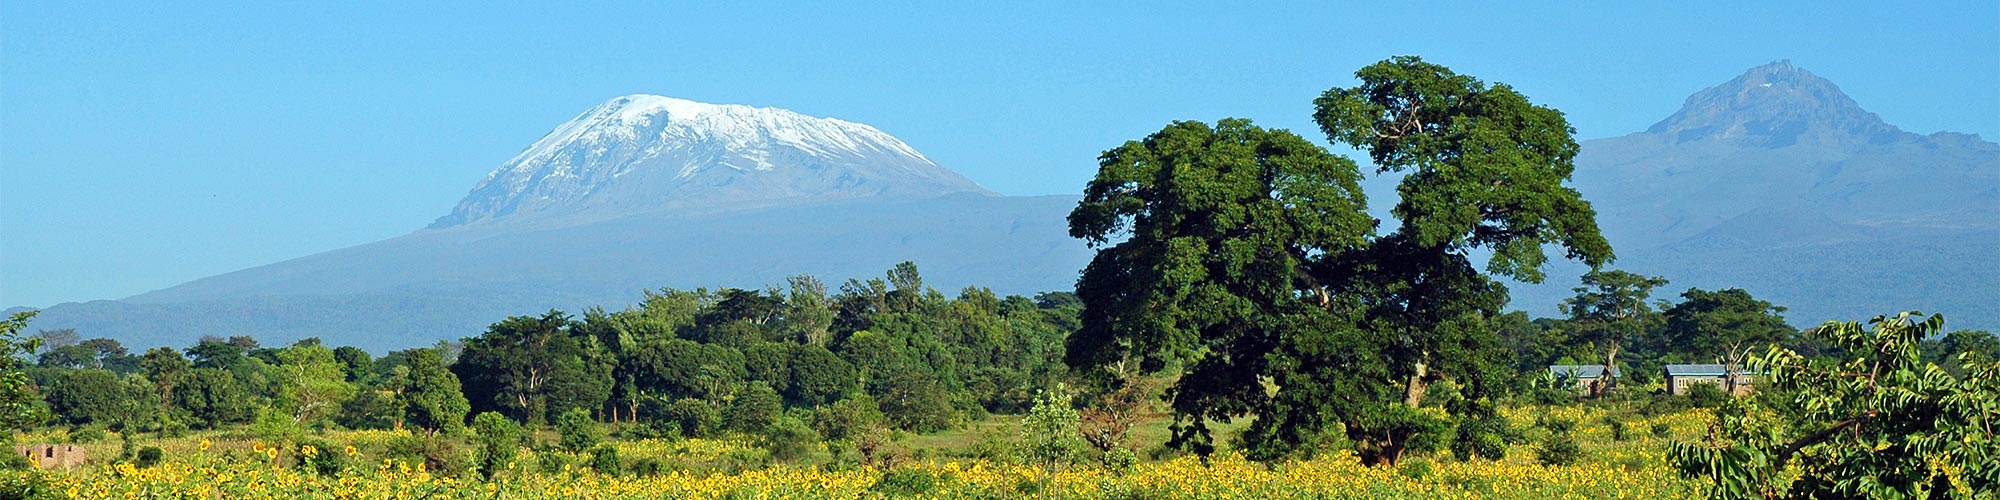 Afrika - Tansania - Kilimanjaro Trekking